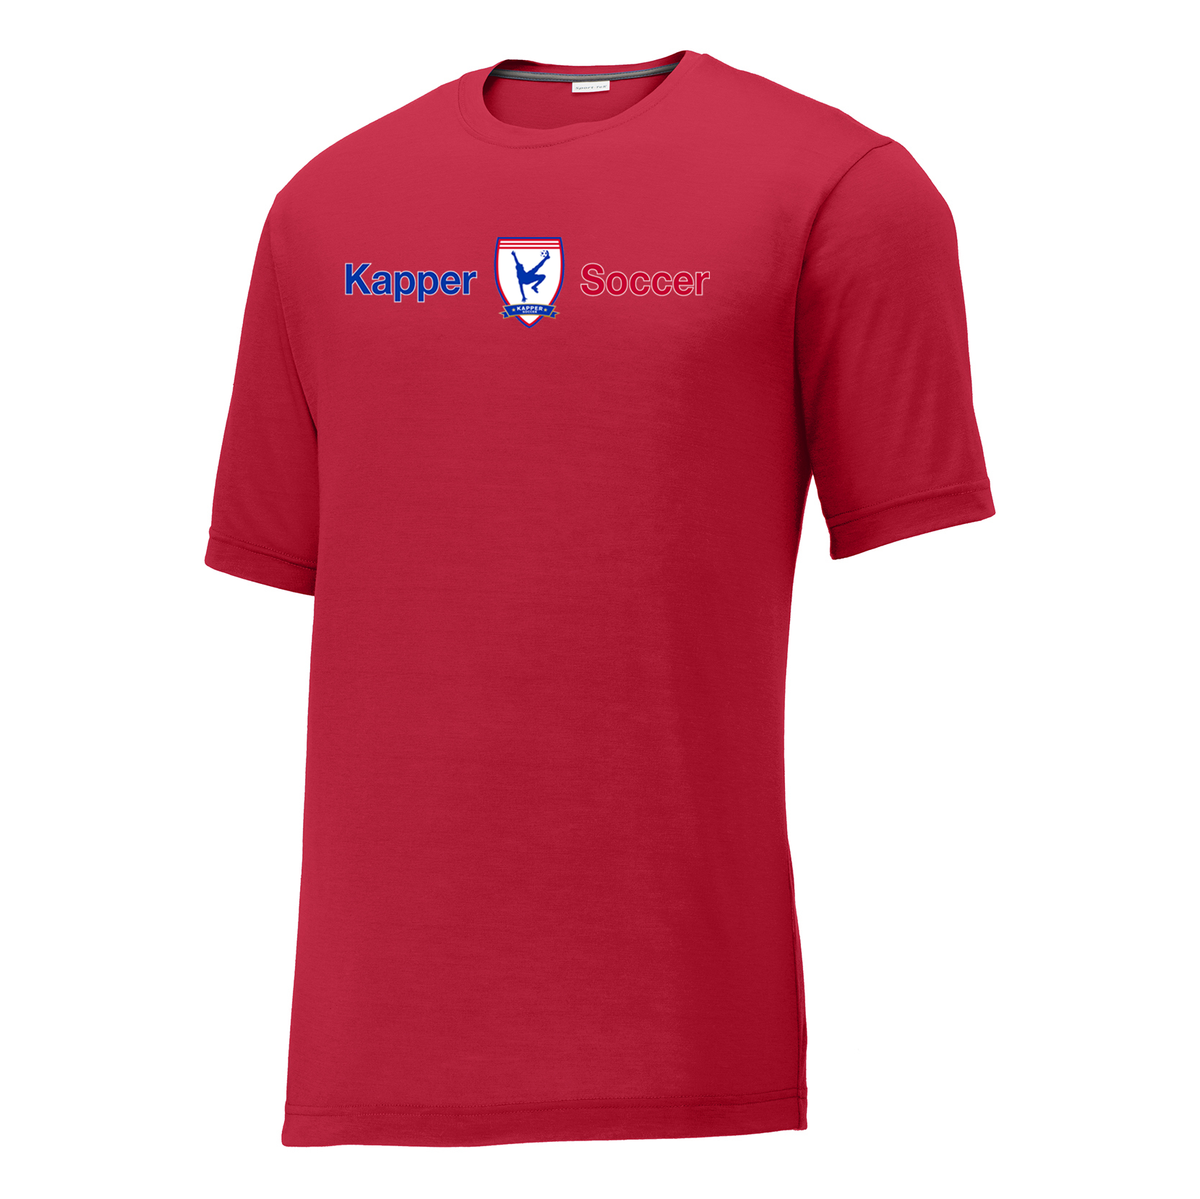 Kapper Soccer CottonTouch Performance T-Shirt